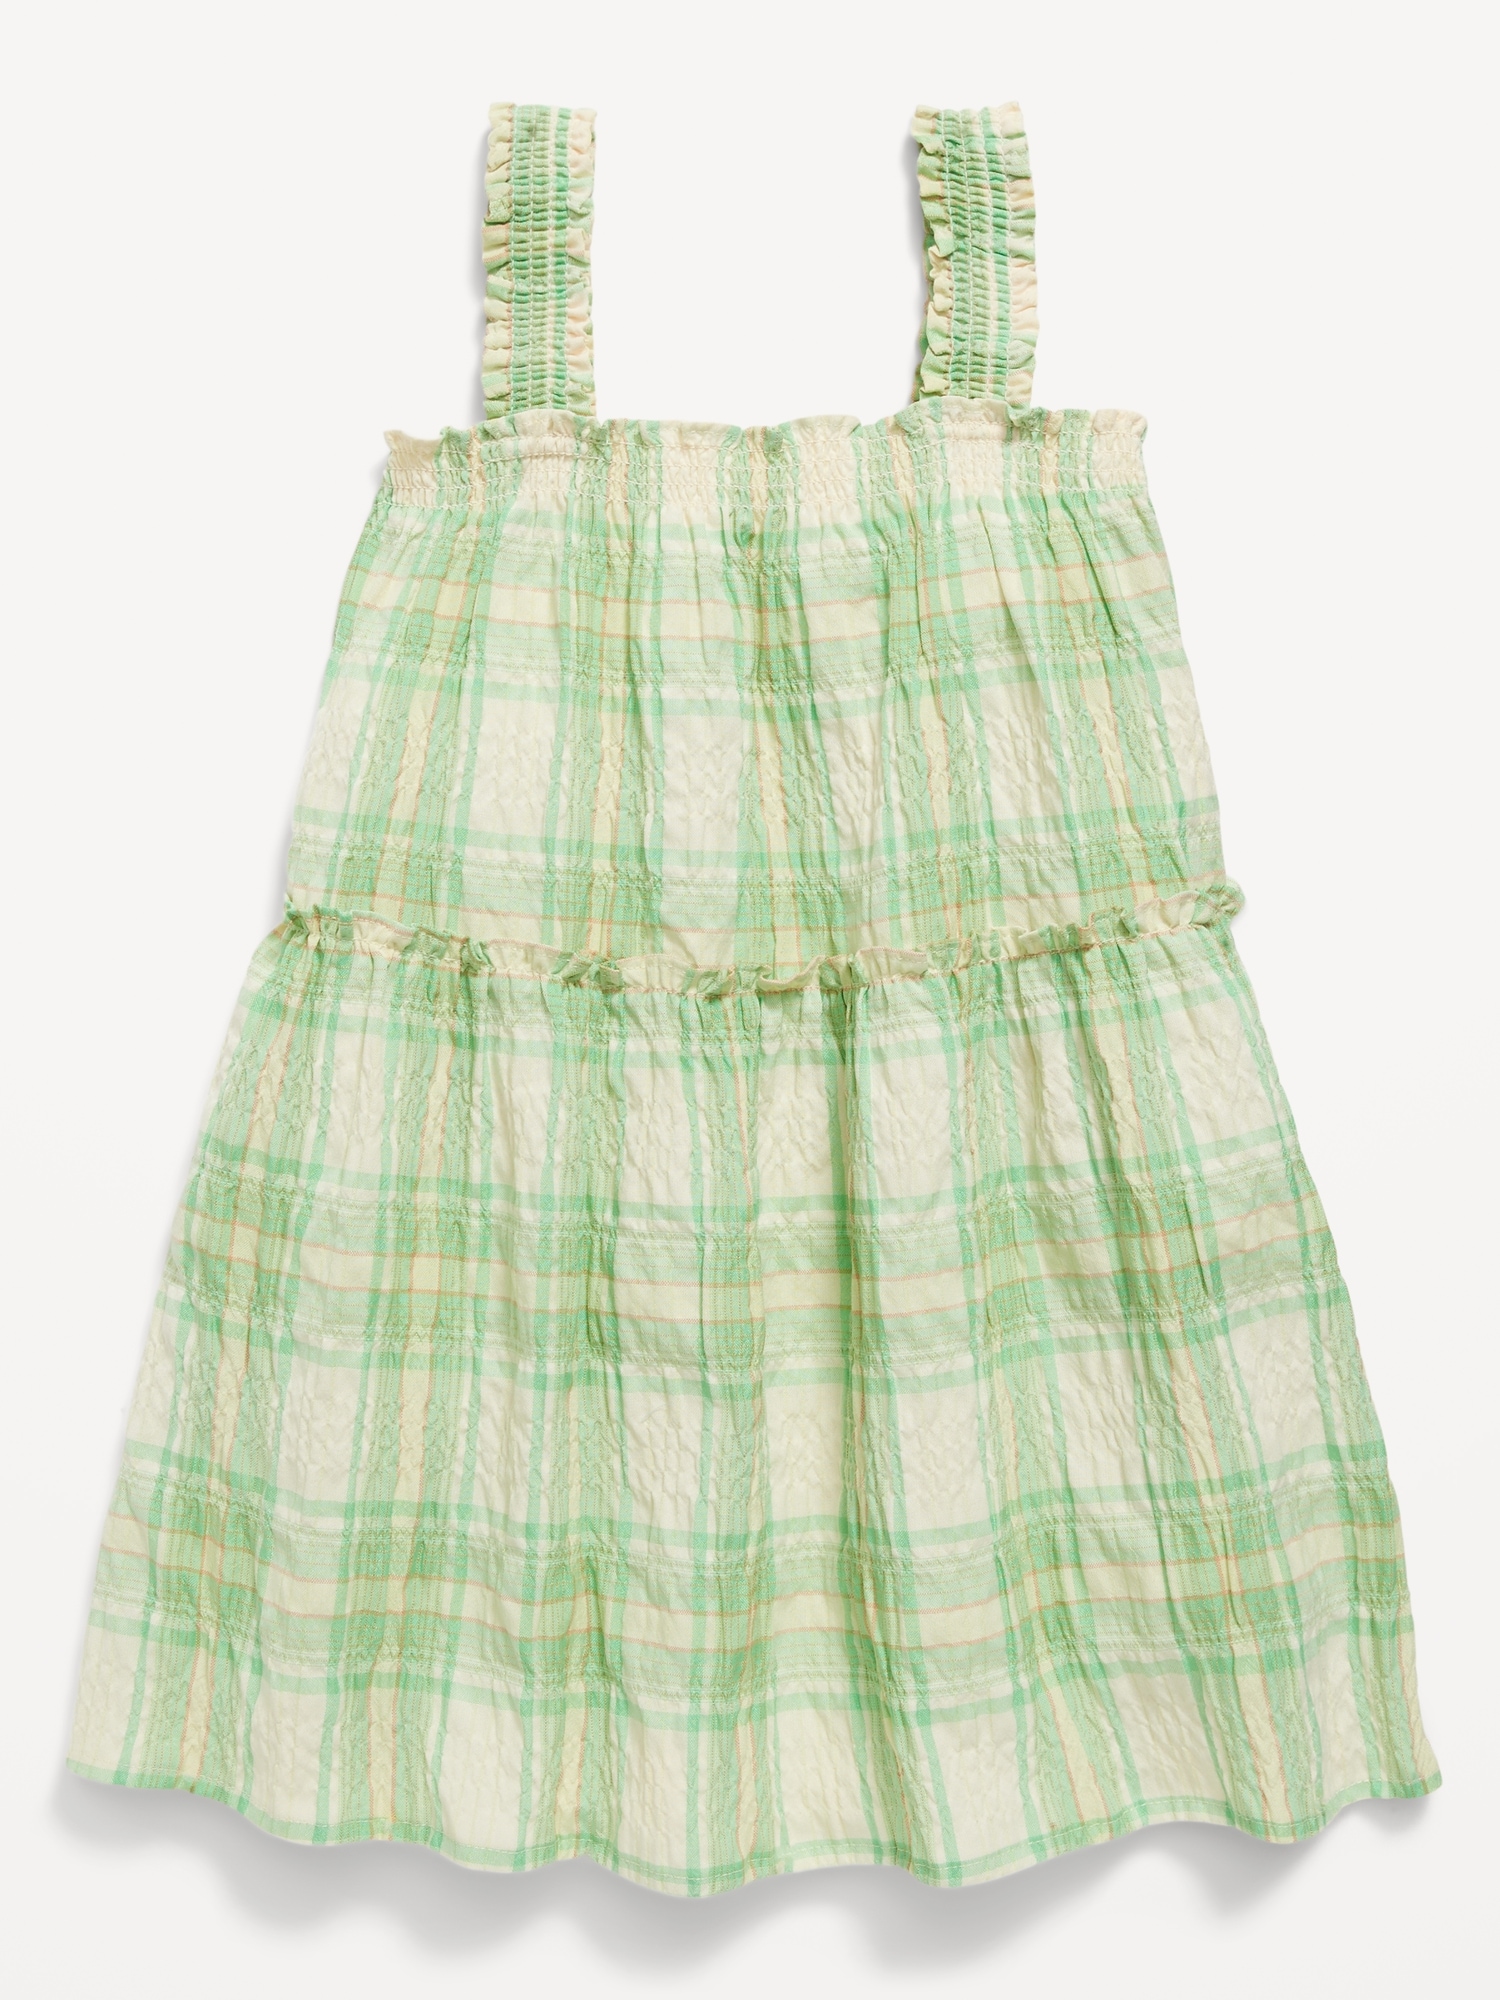 Printed Sleeveless Ruffle-Trim Swing Dress for Toddler Girls